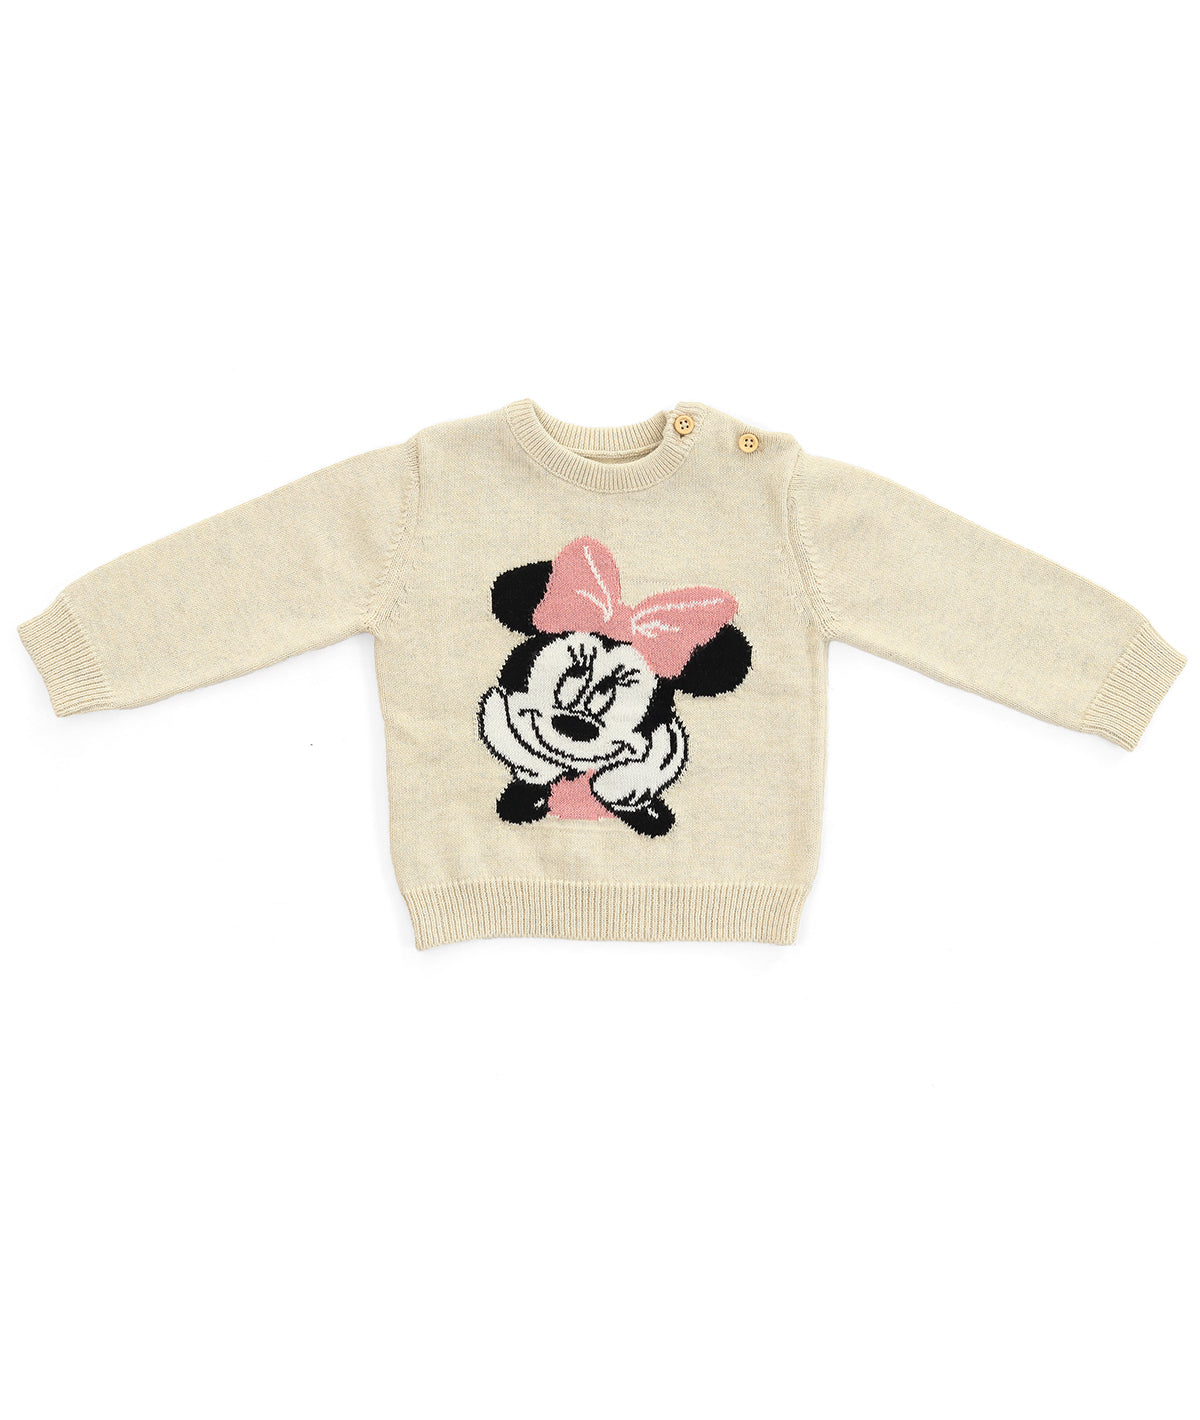 Minnie Mouse Jumper for Newborn Babies in Natural Melange & Blossom Color